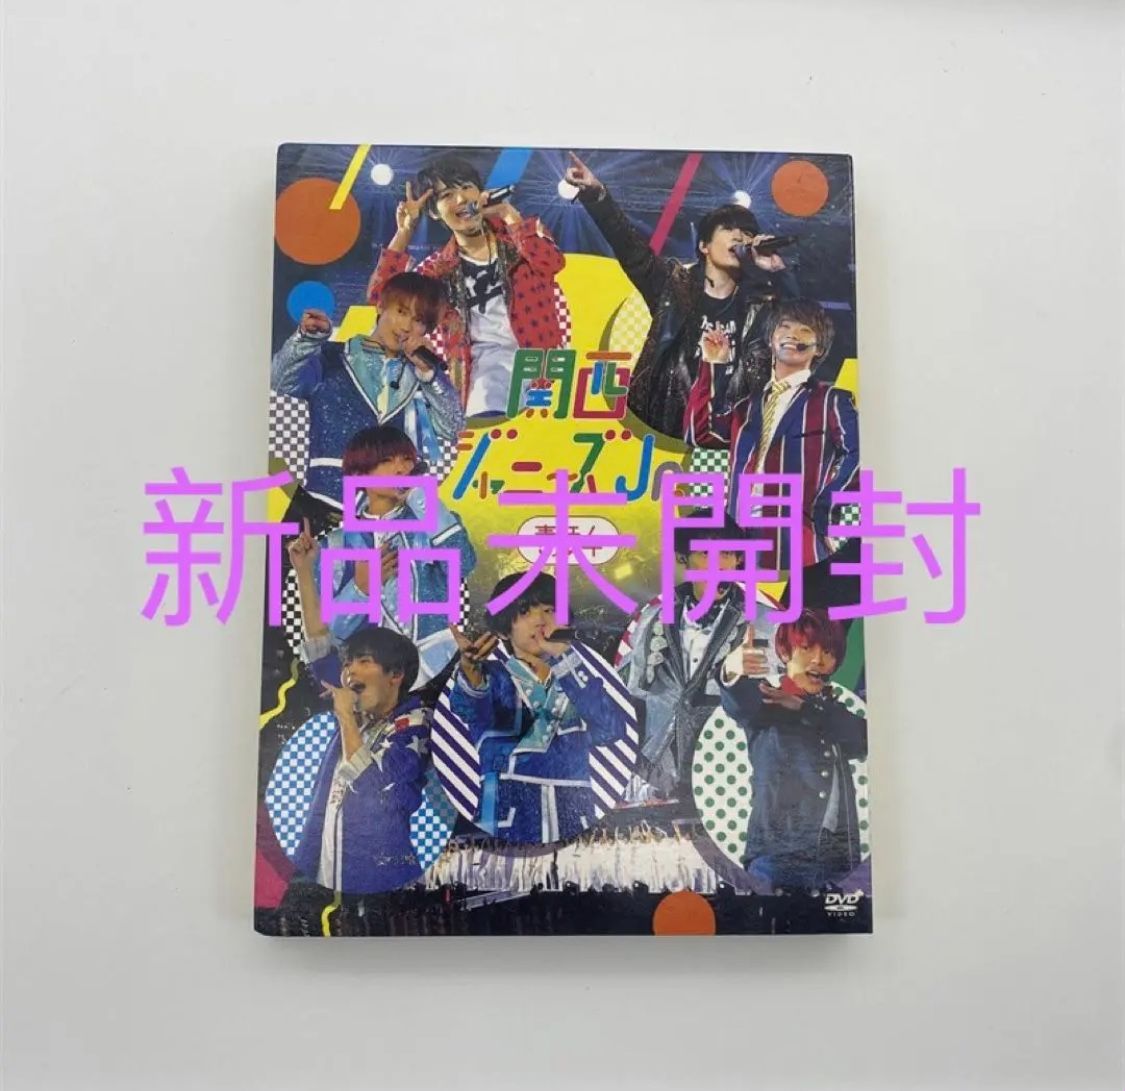 DVD/ブルーレイ関西ジャニーズJr. 素顔4 - アイドル